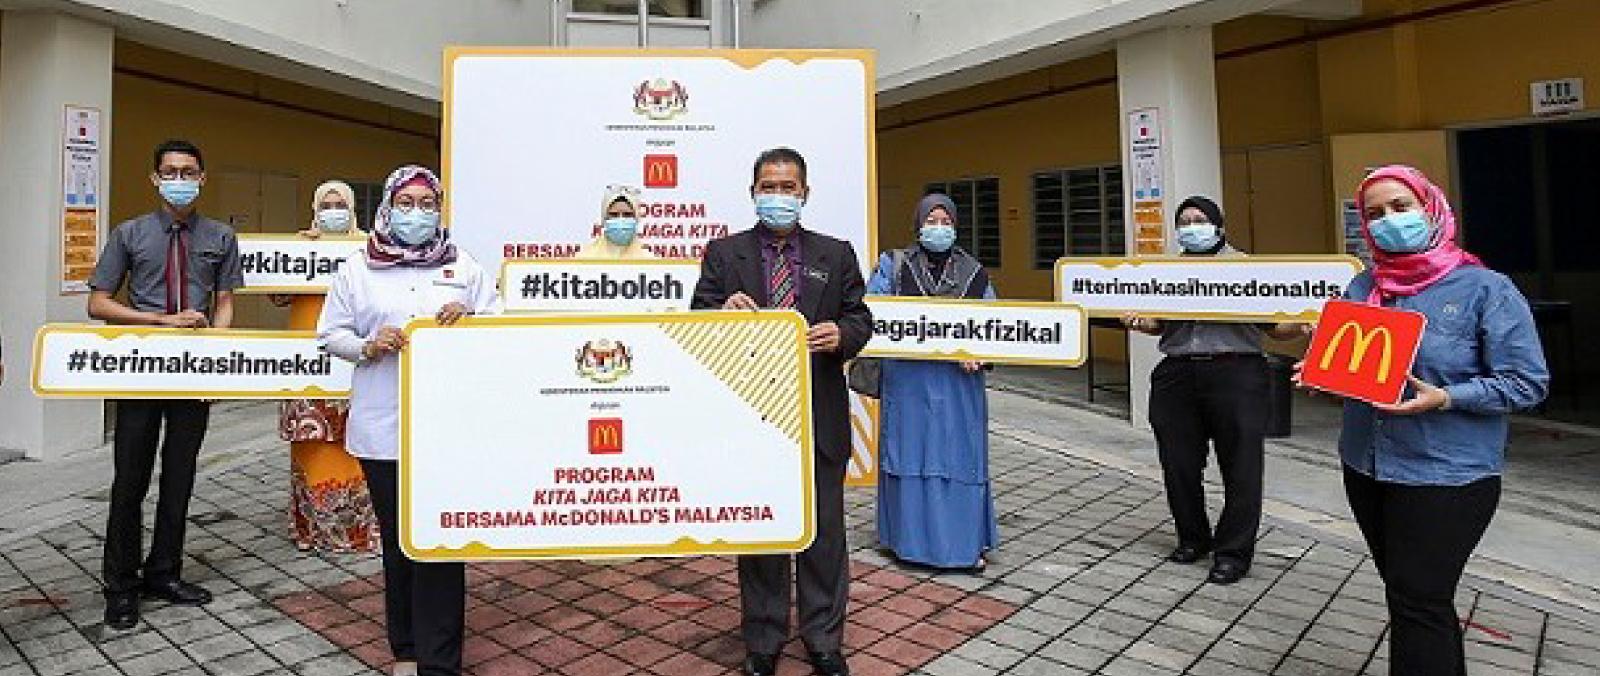 McDonald’s Malaysia menyumbang mesej  pencegahan COVID-19 di sekolah's image'